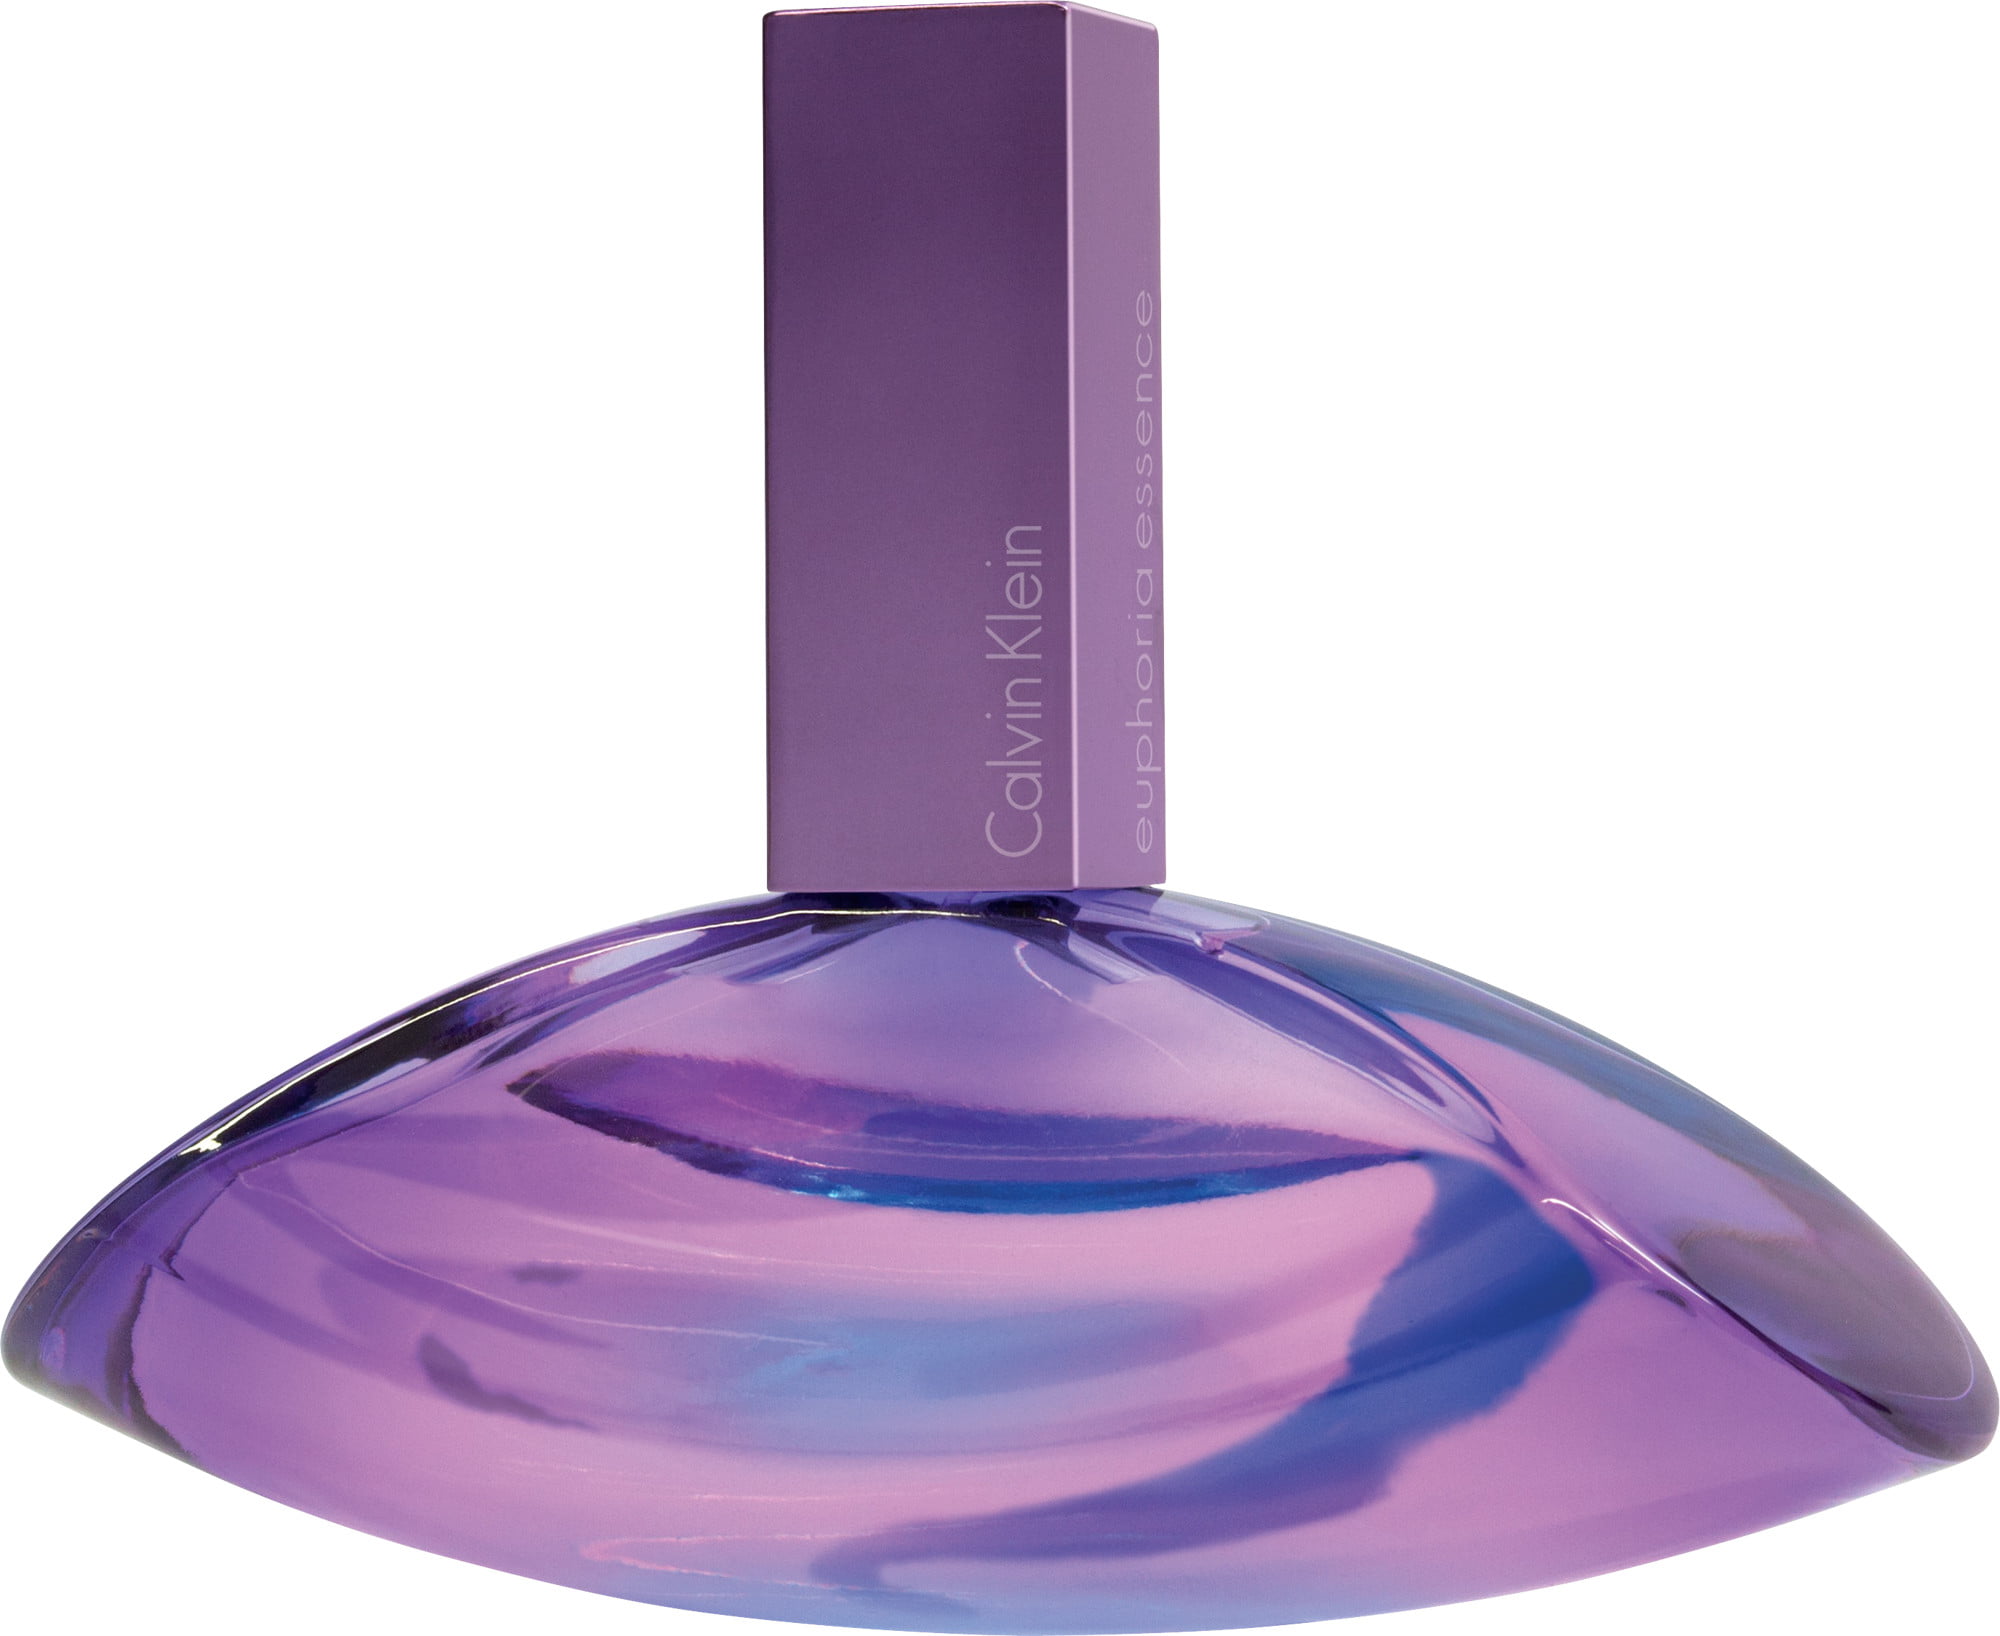 Calvin Klein Euphoria Essence Eau de Parfum Spray, Perfume for Women,   Oz 